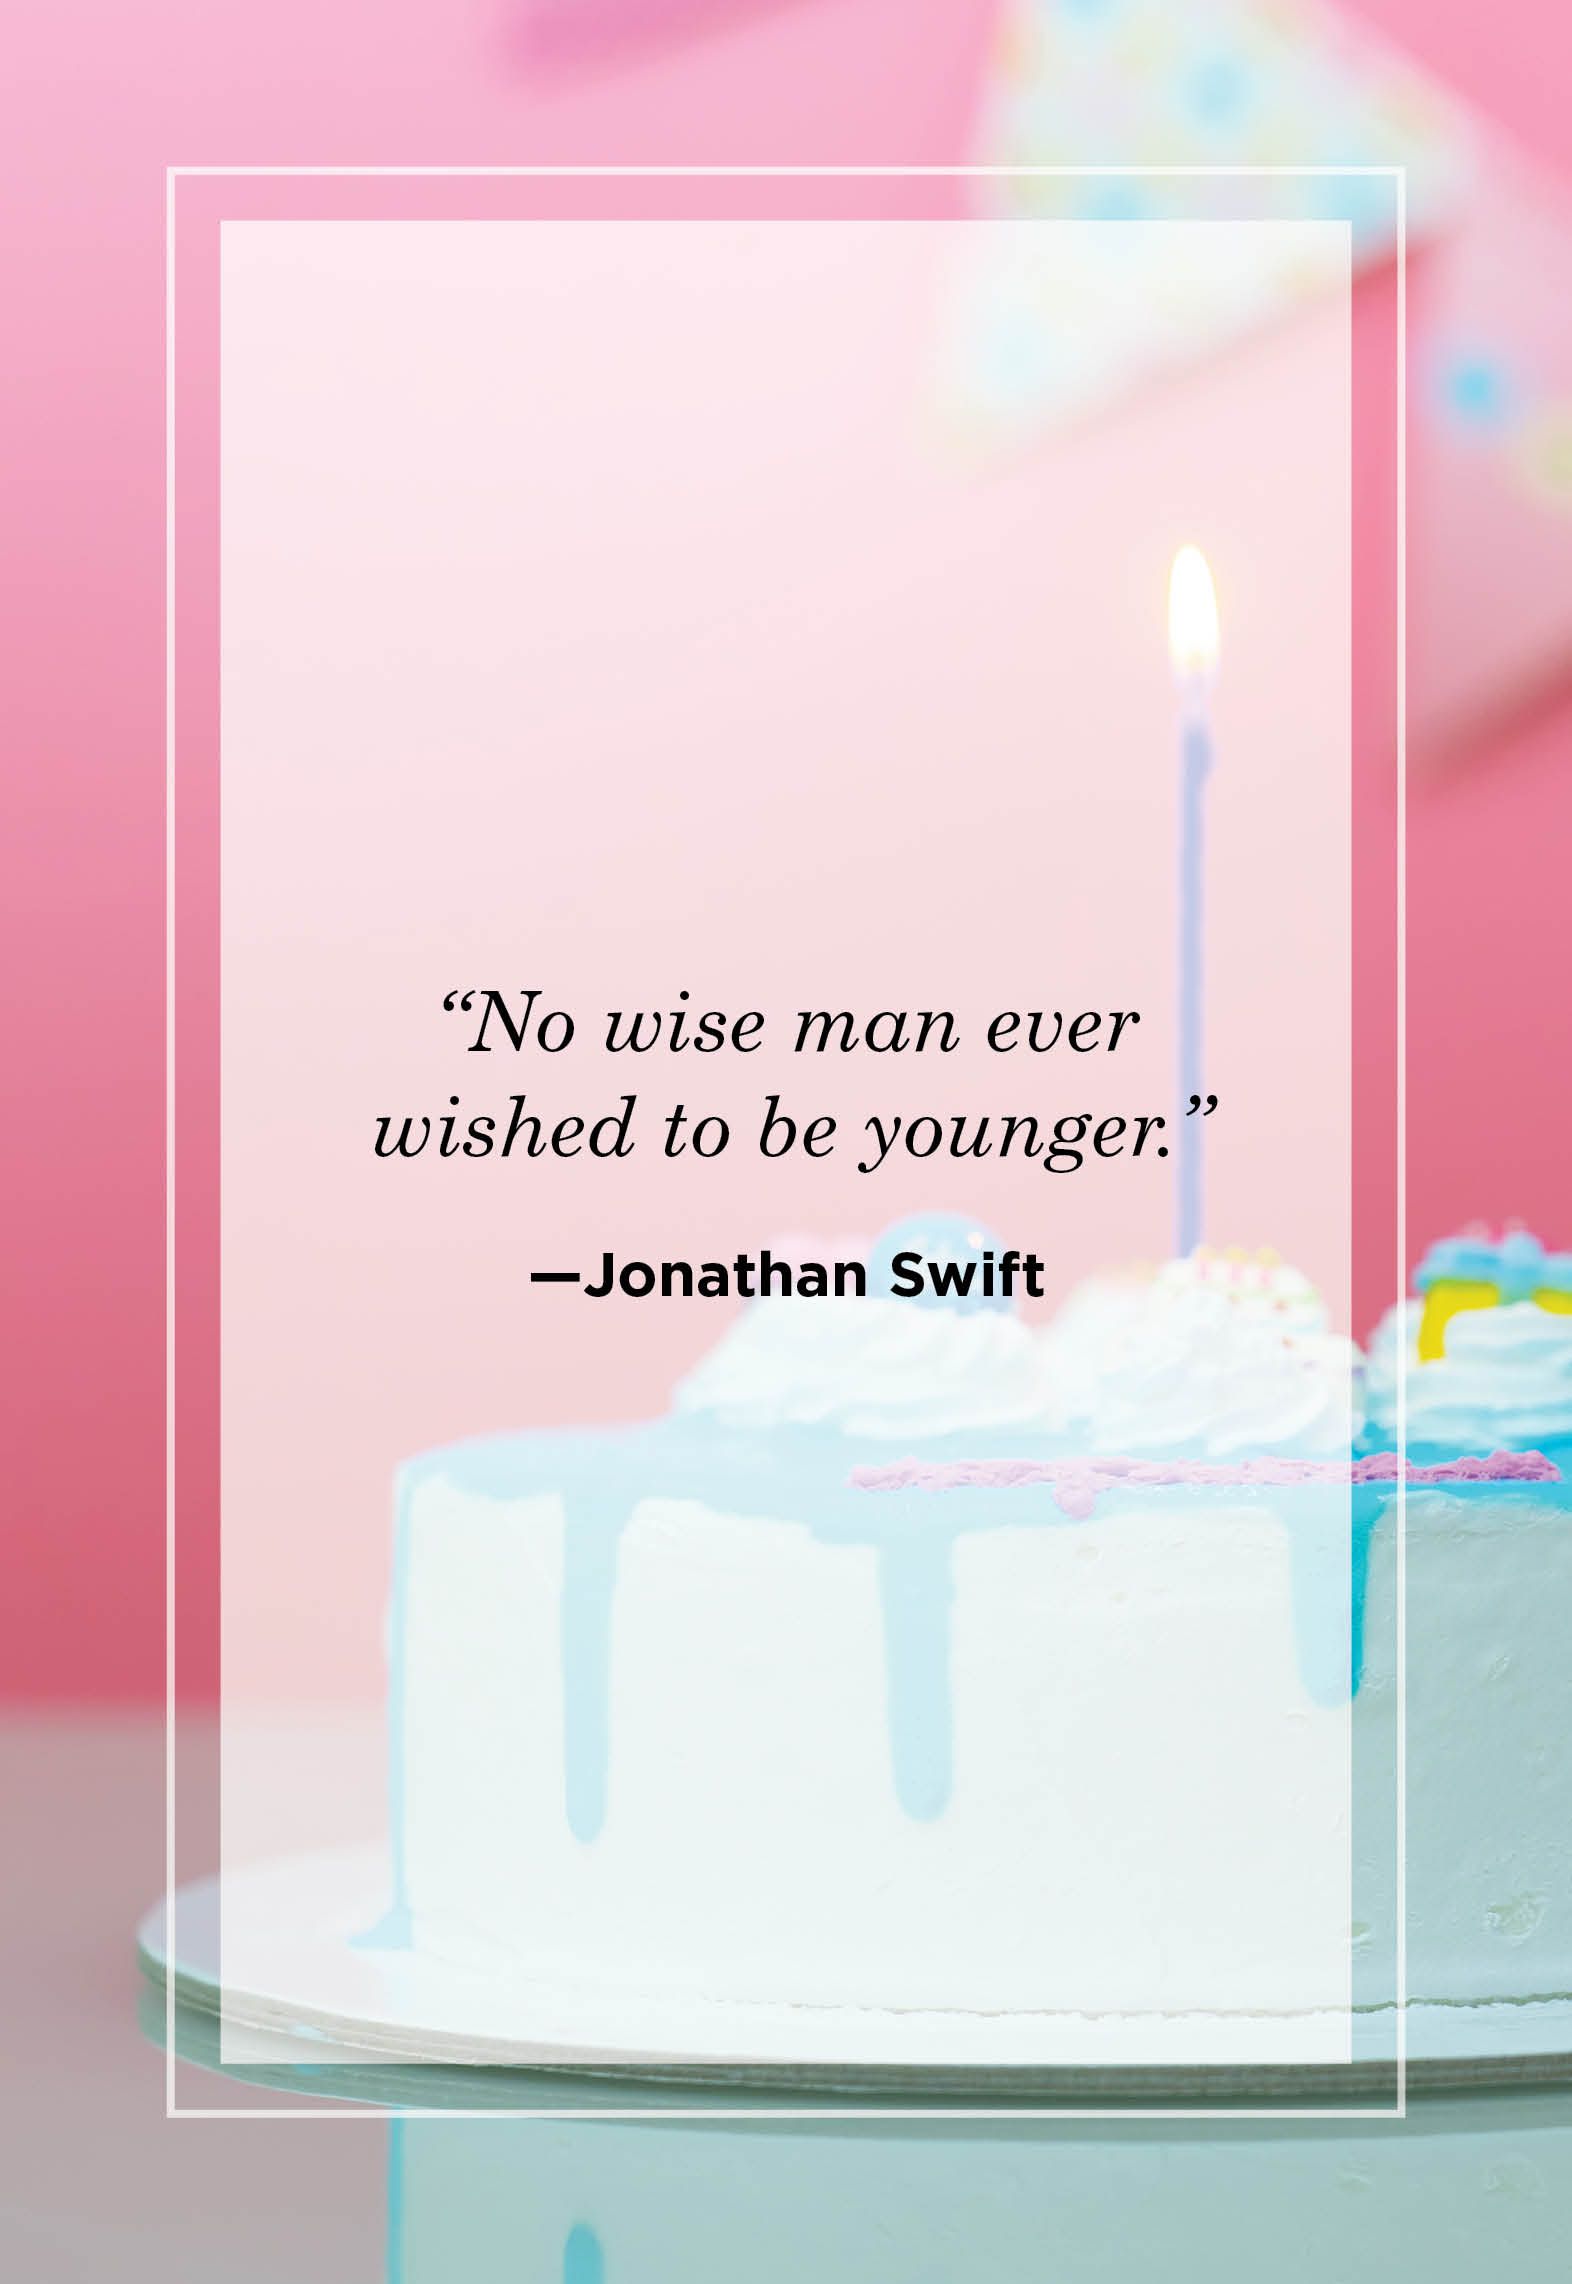 happy birthday quotes for guys